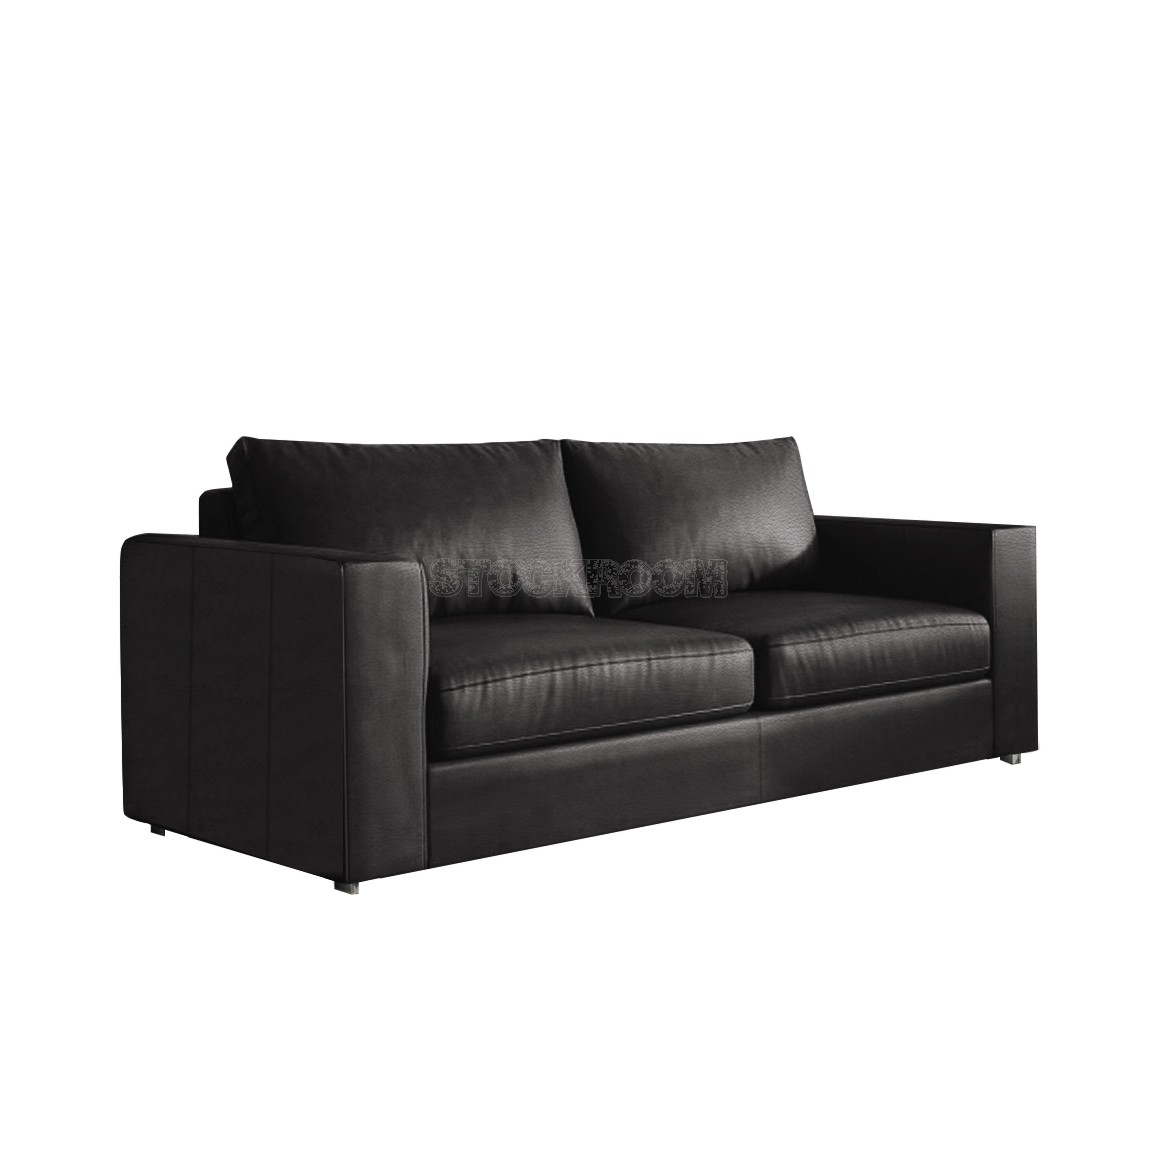 Kagan Leather Feather Down Sofa - 2 seater